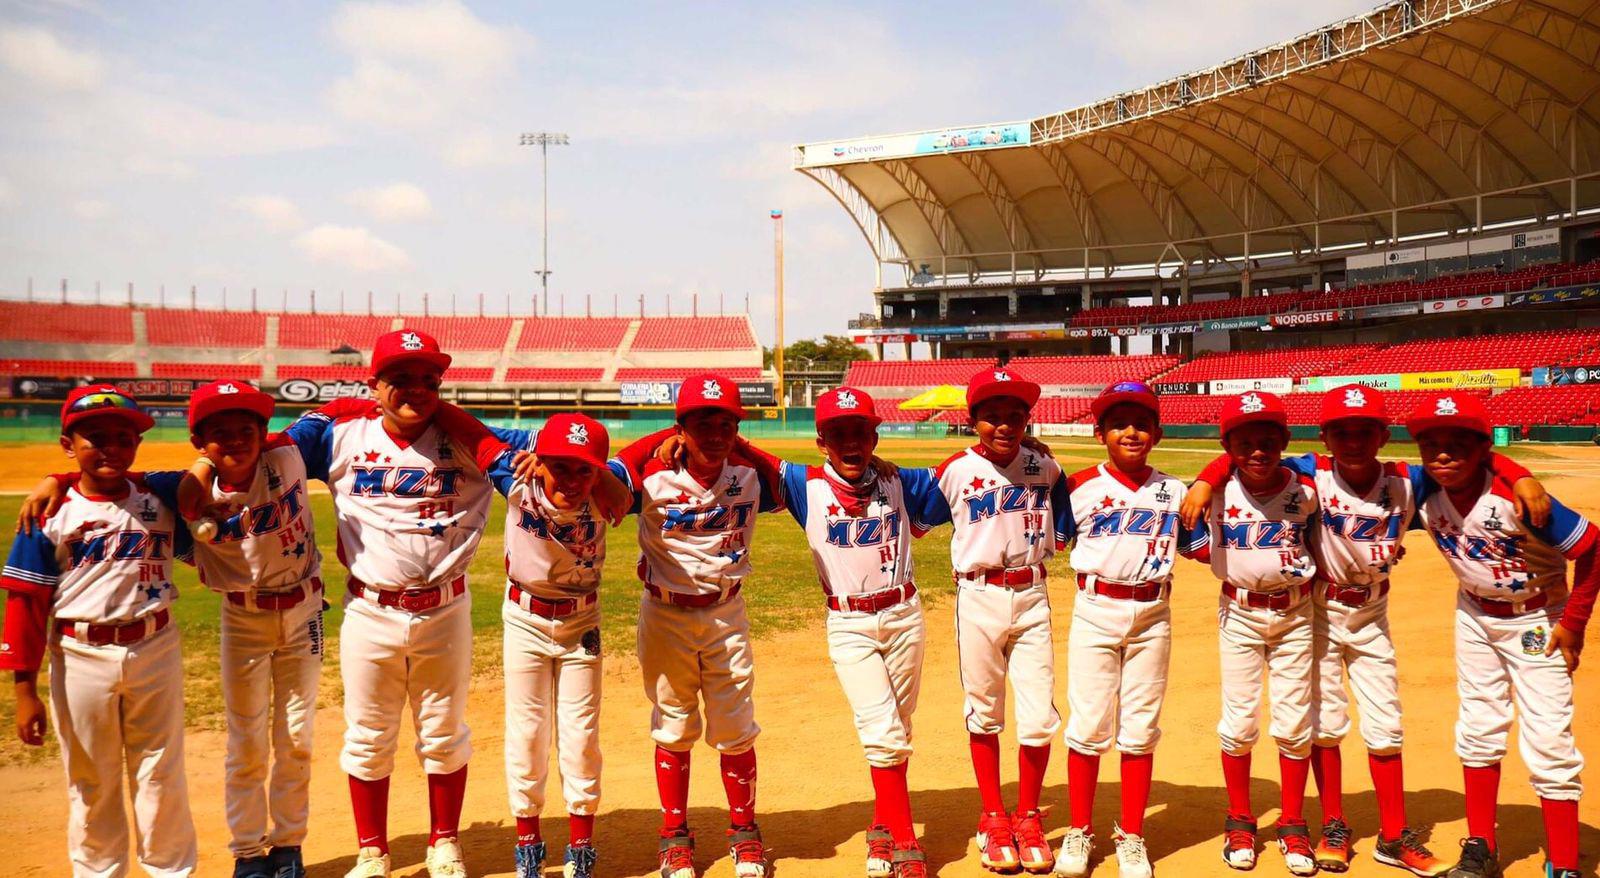 $!Noquean porteños en arranque del Mazatlán Baseball Tournament